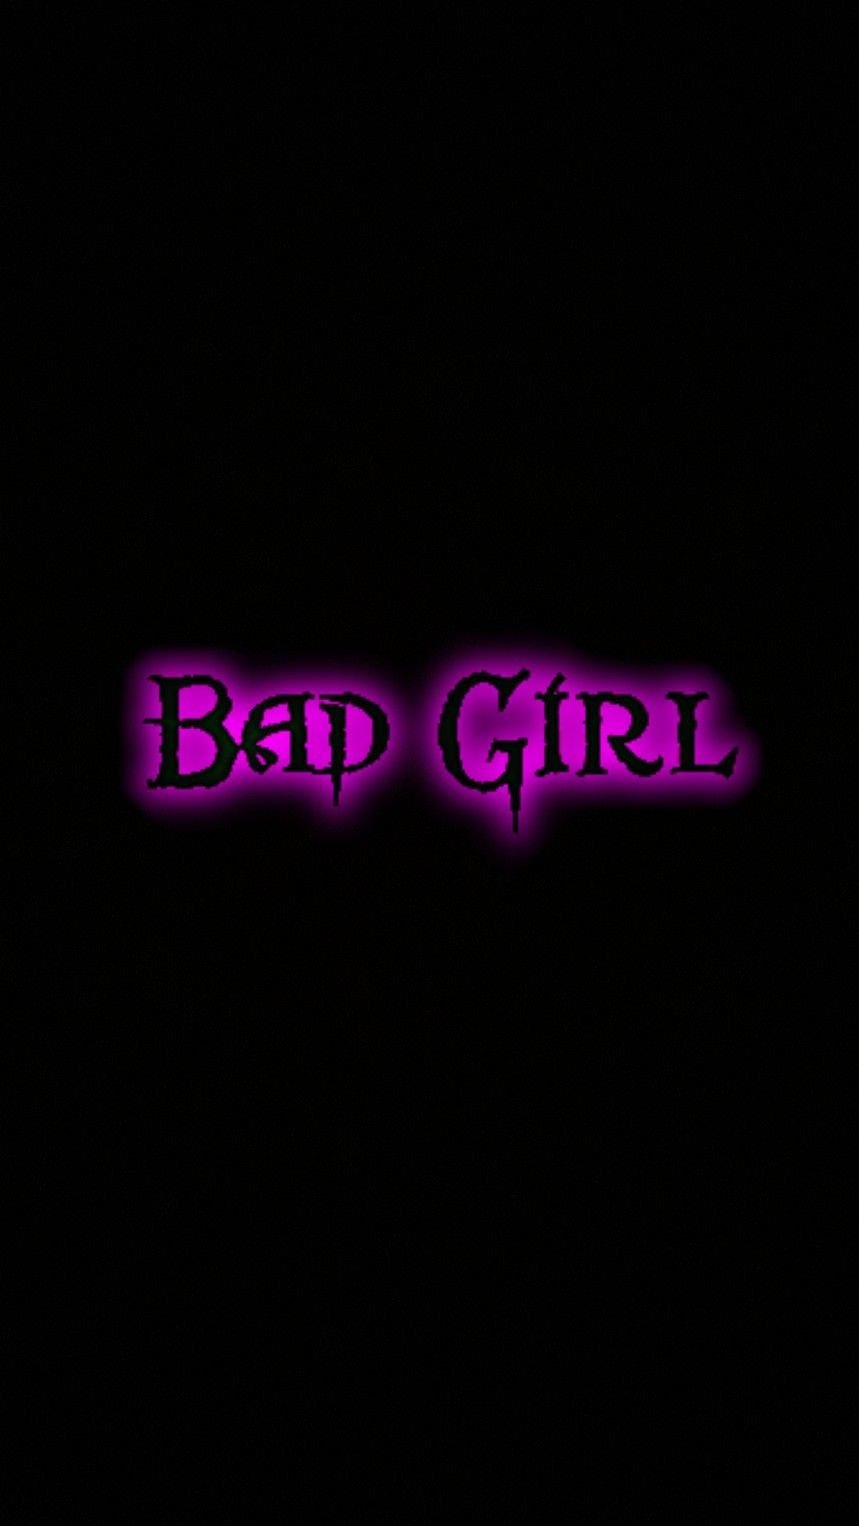 Bad Girl - Black Backoground